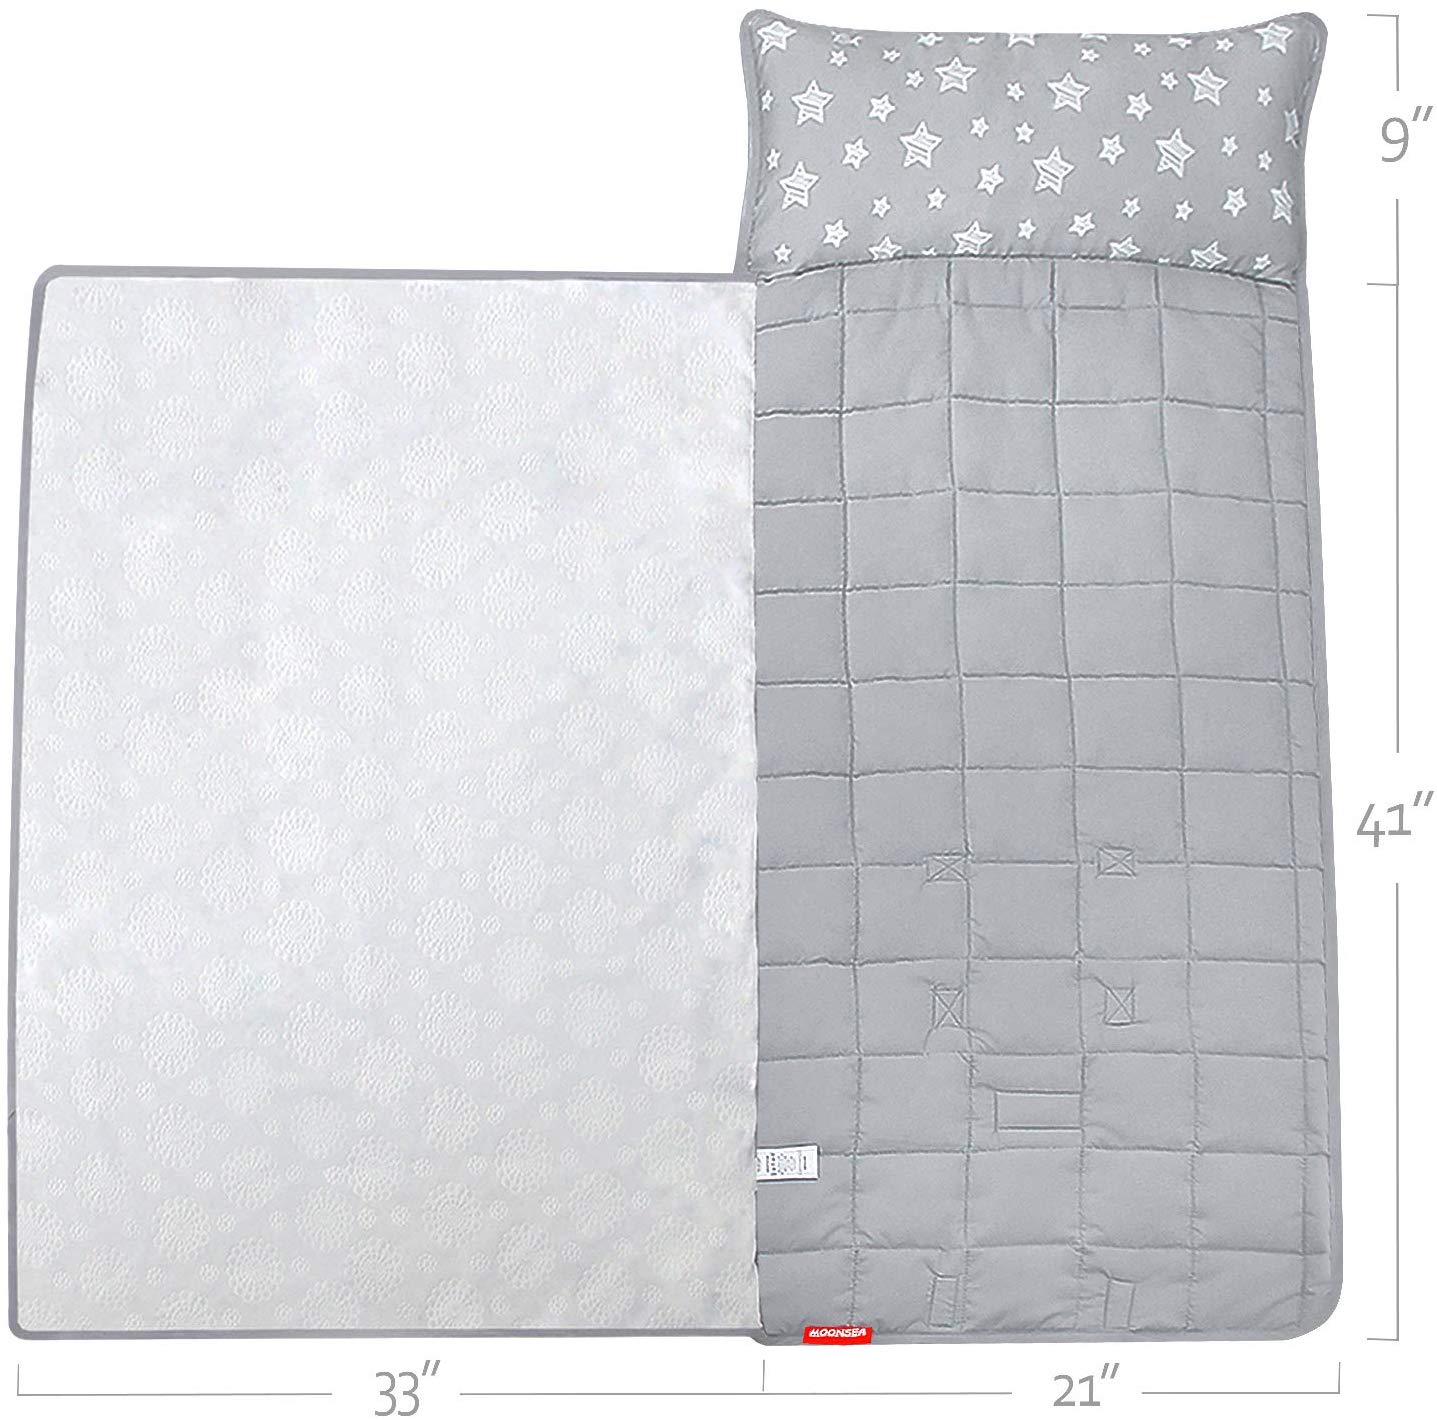 Toddler Nap Mat- Removable Pillow And Fleece Minky Blanket, 21''x50'', Grey Star